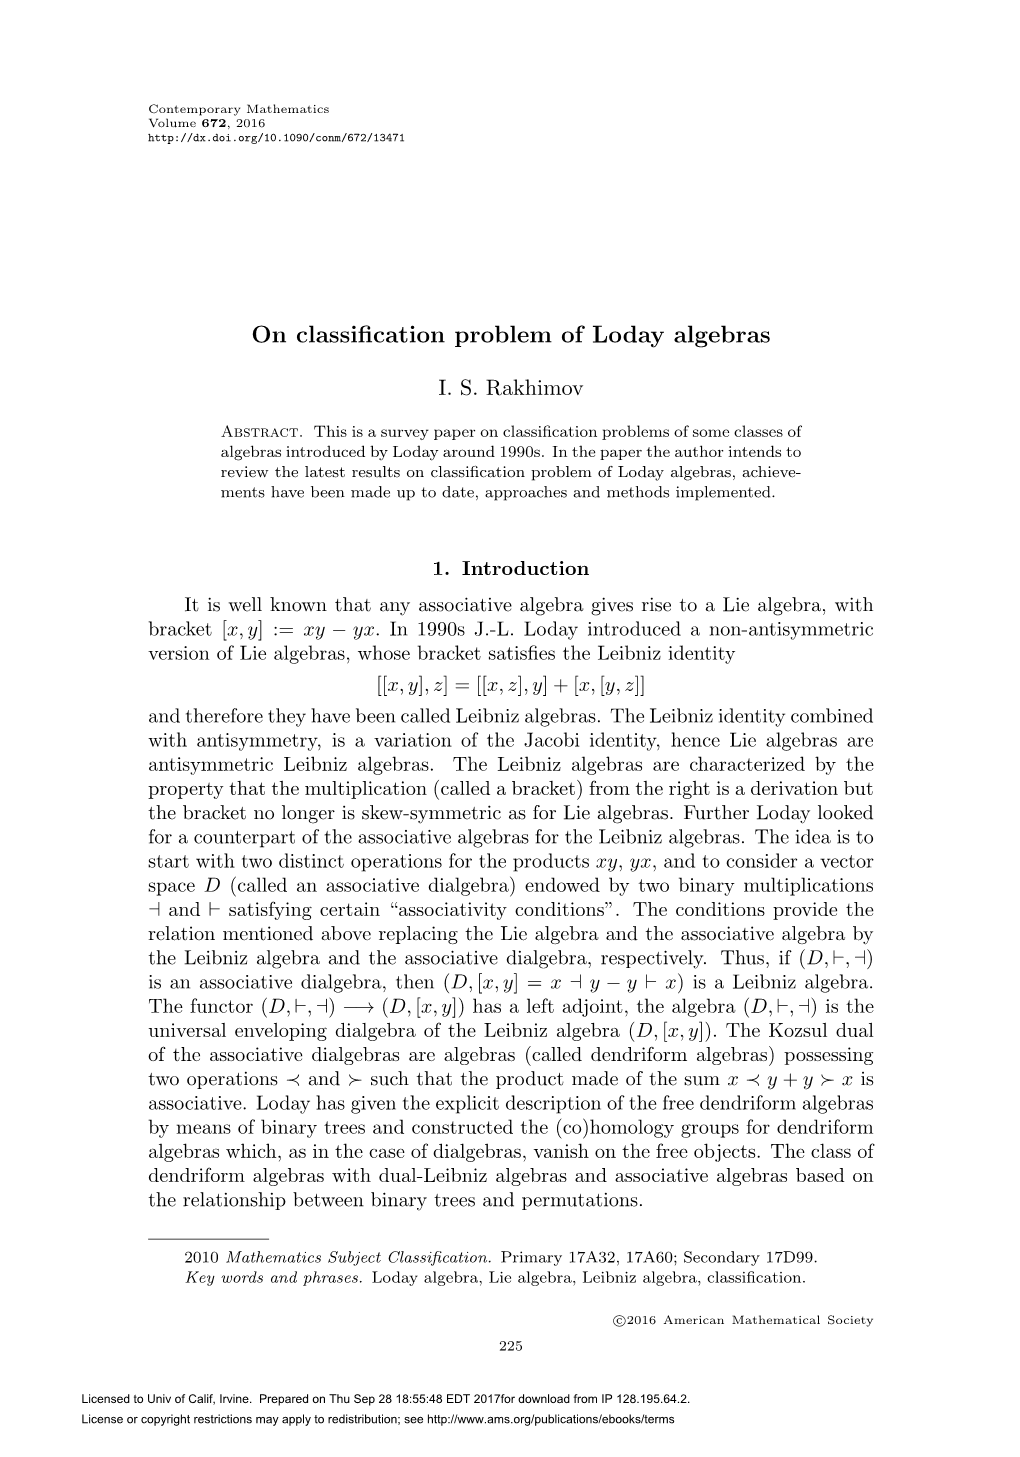 On Classification Problem of Loday Algebras 227